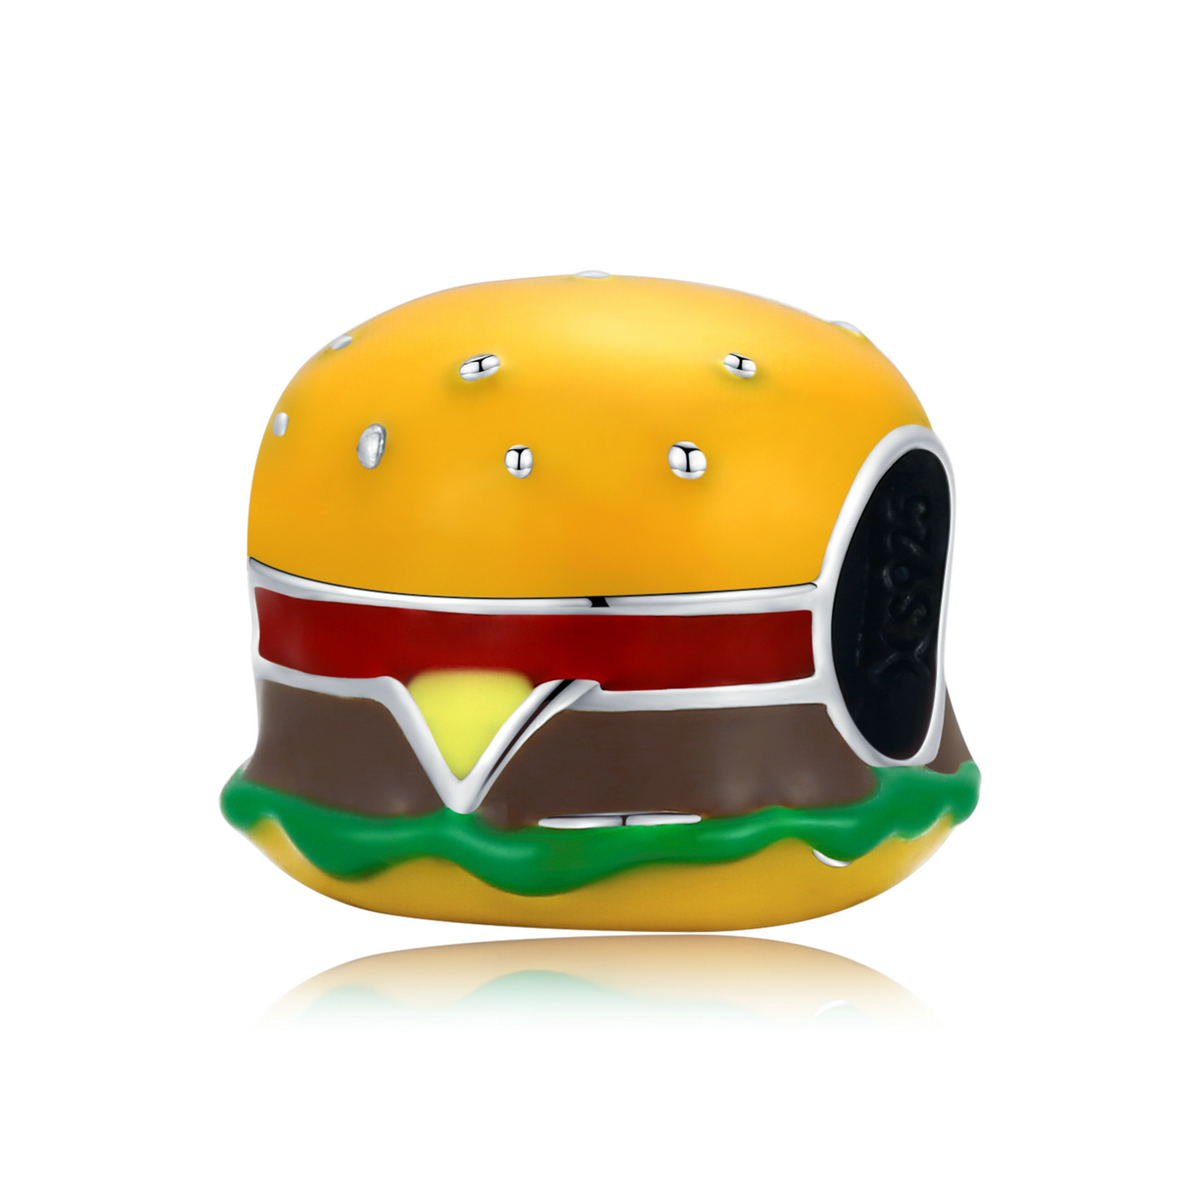 pandora style gourmet burger charm scc2014